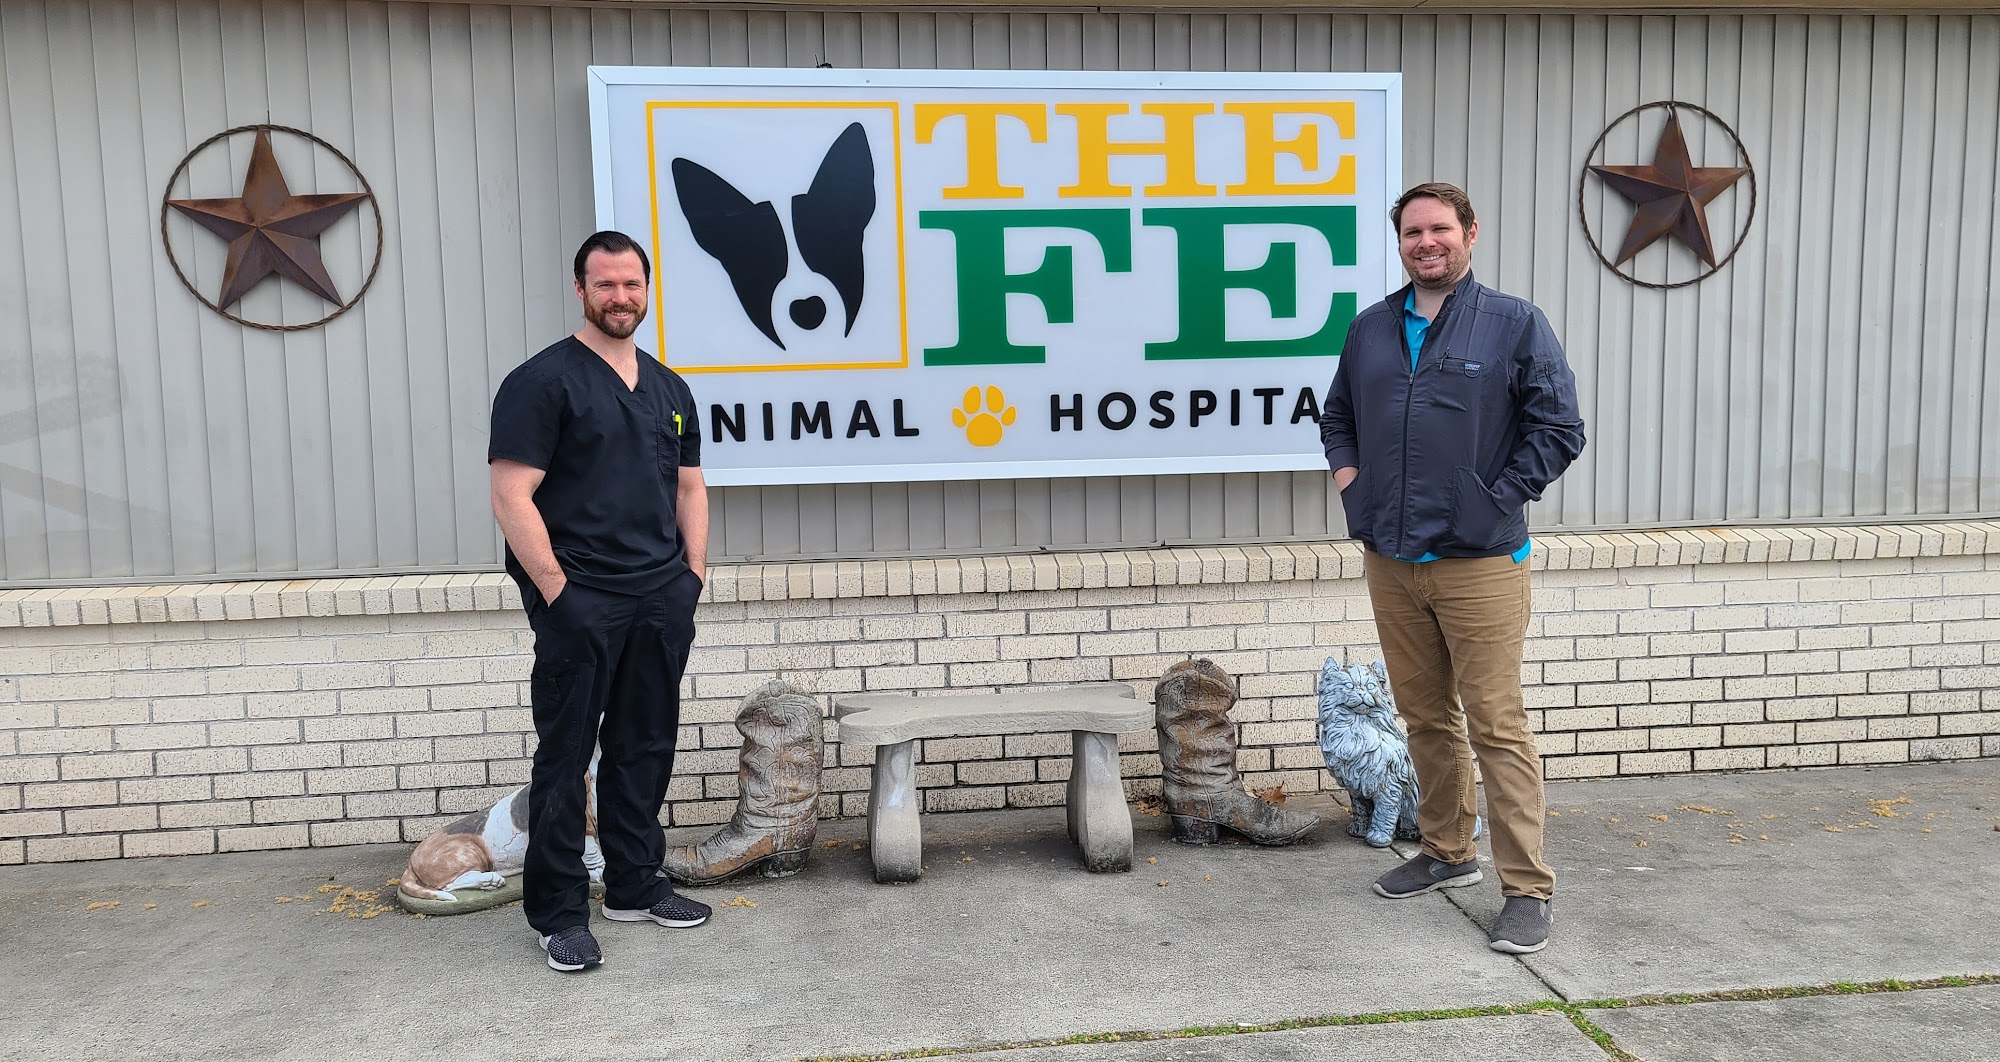 The Fe Animal Hospital